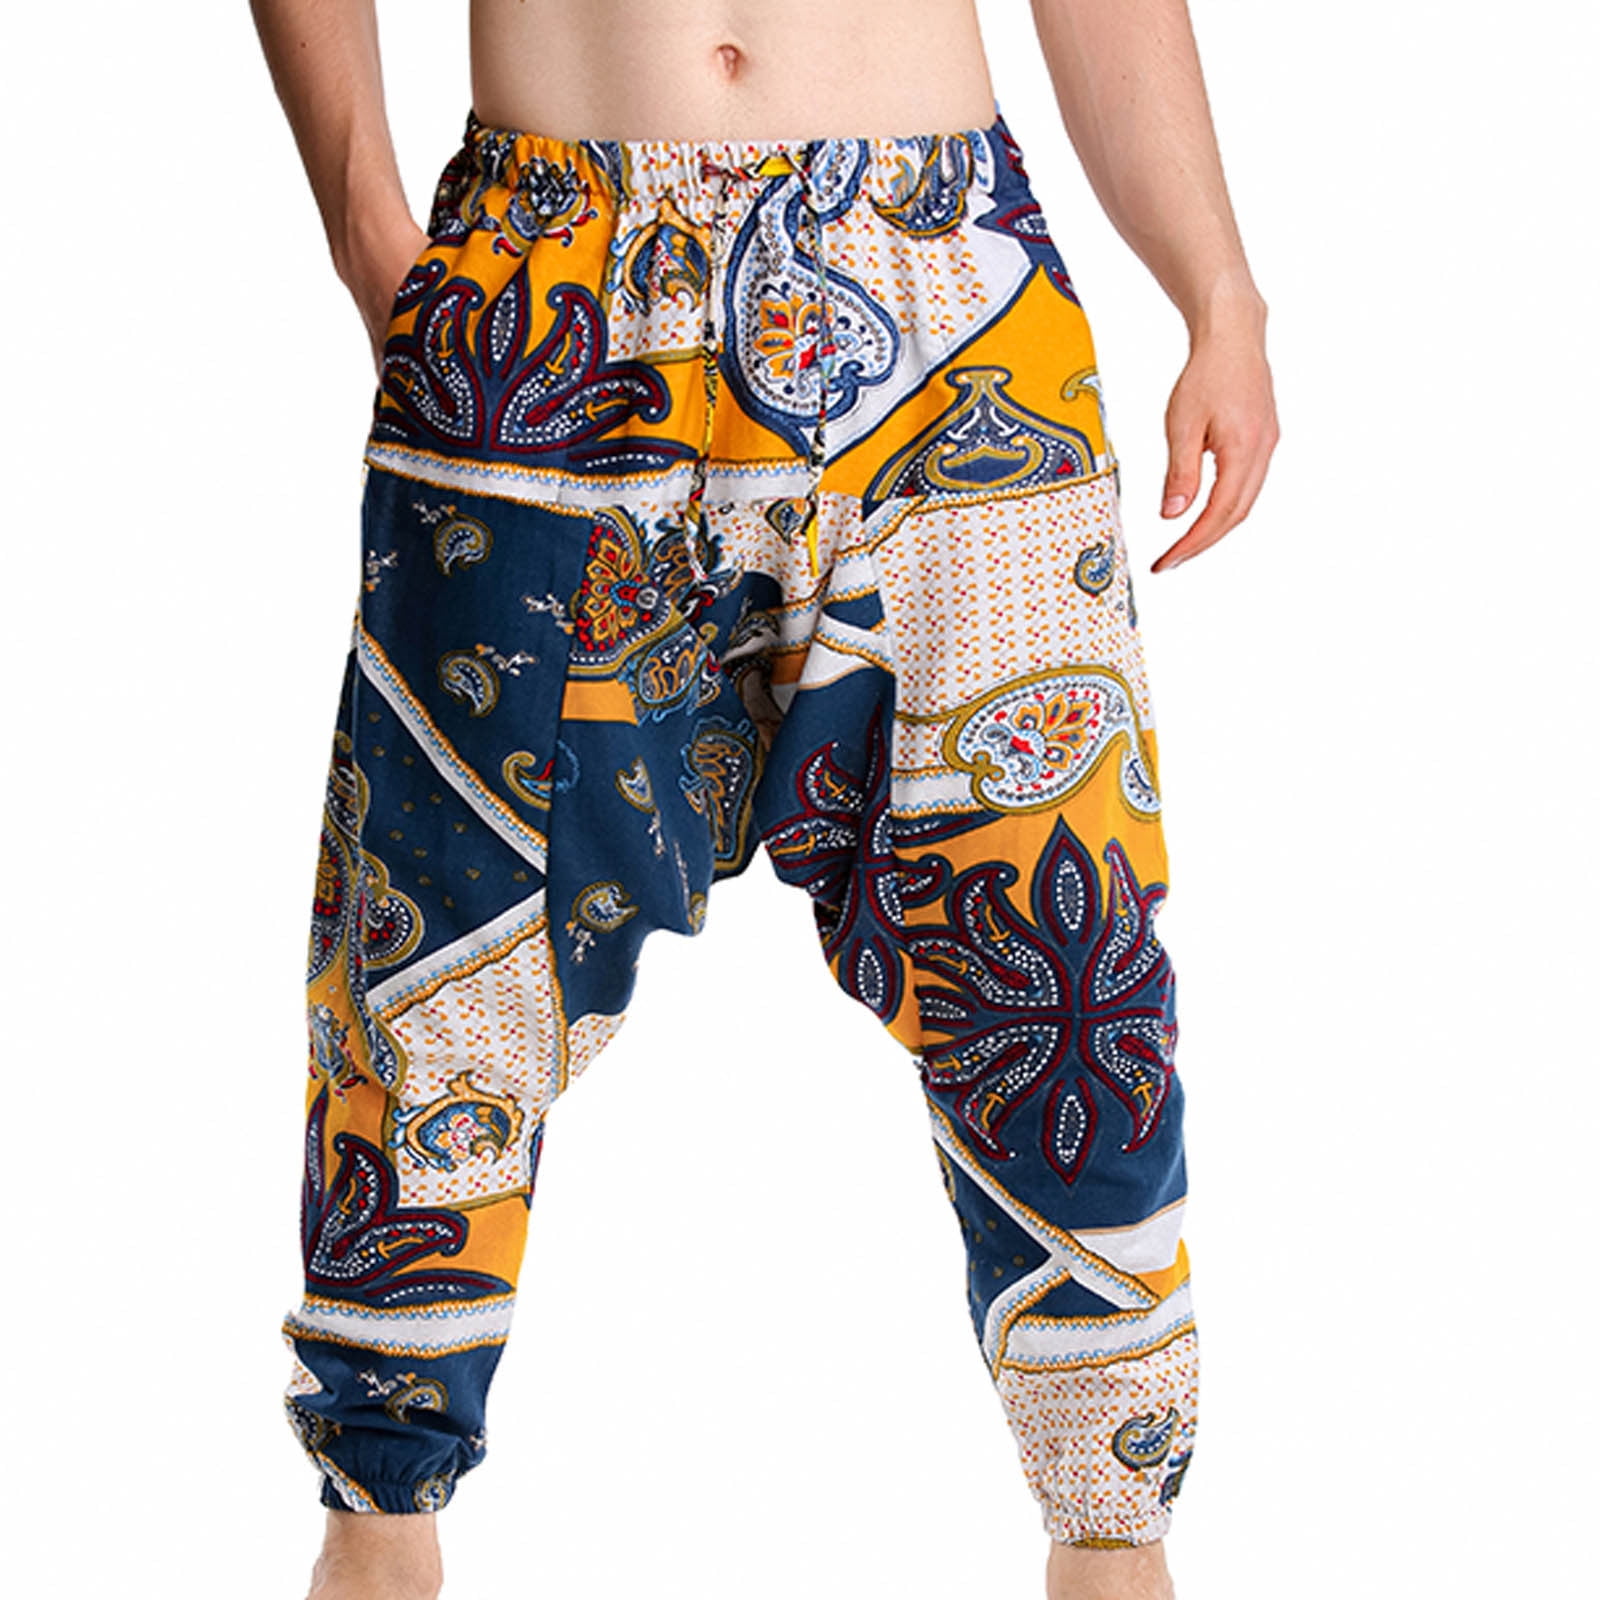 Stamzod Vintage Print Harem Pants Men Cotton Baggy Hippie Boho Gypsy Aladdin  Yoga Harem Pants Trousers Loose Casual Beach Pants With Pockets 